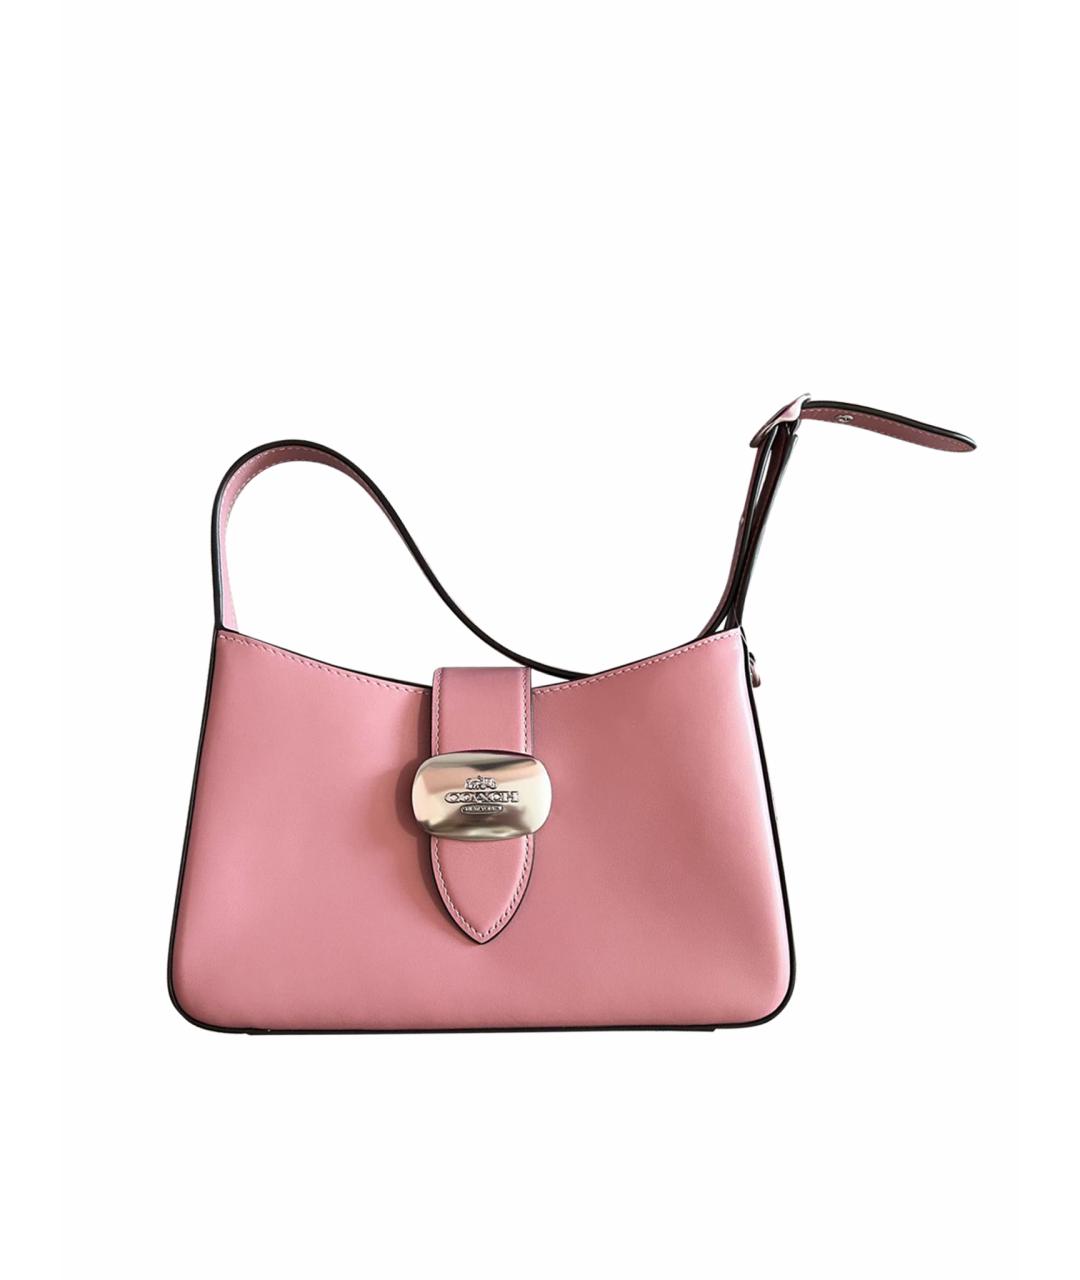 COACH Розовая кожаная сумка с короткими ручками, фото 1